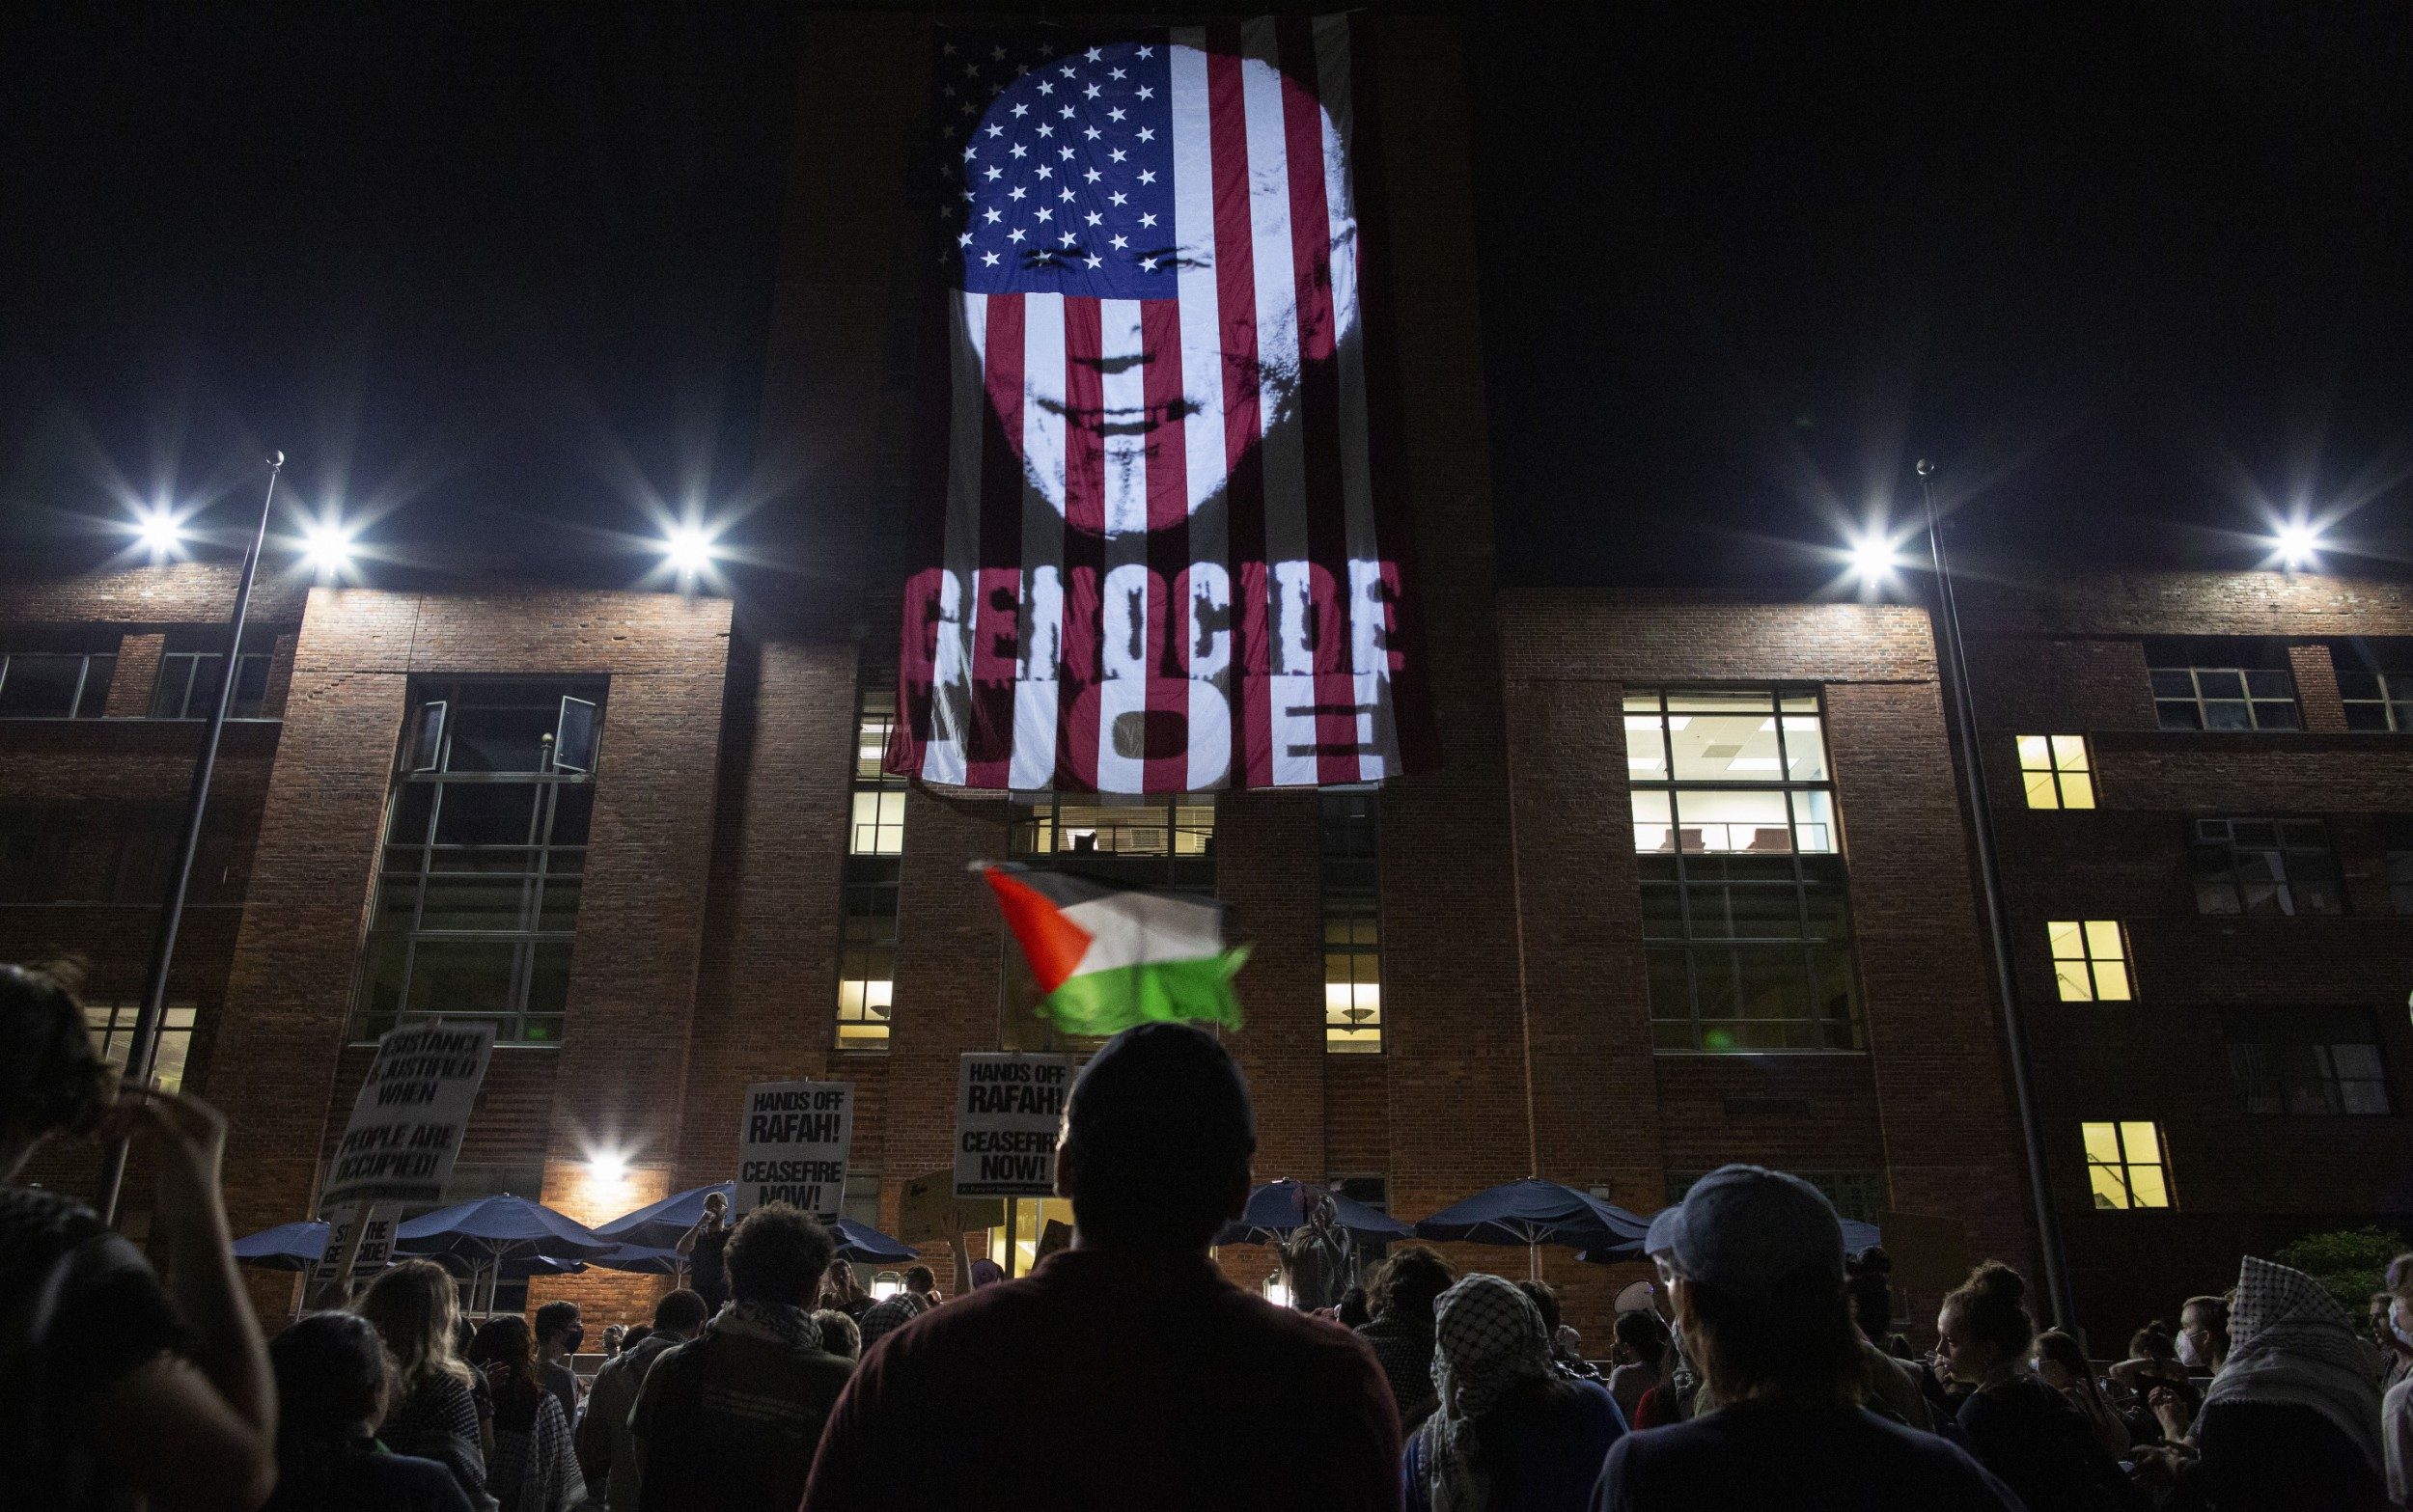 pro-palestine protesters project ‘student intifada’ slogan onto university building